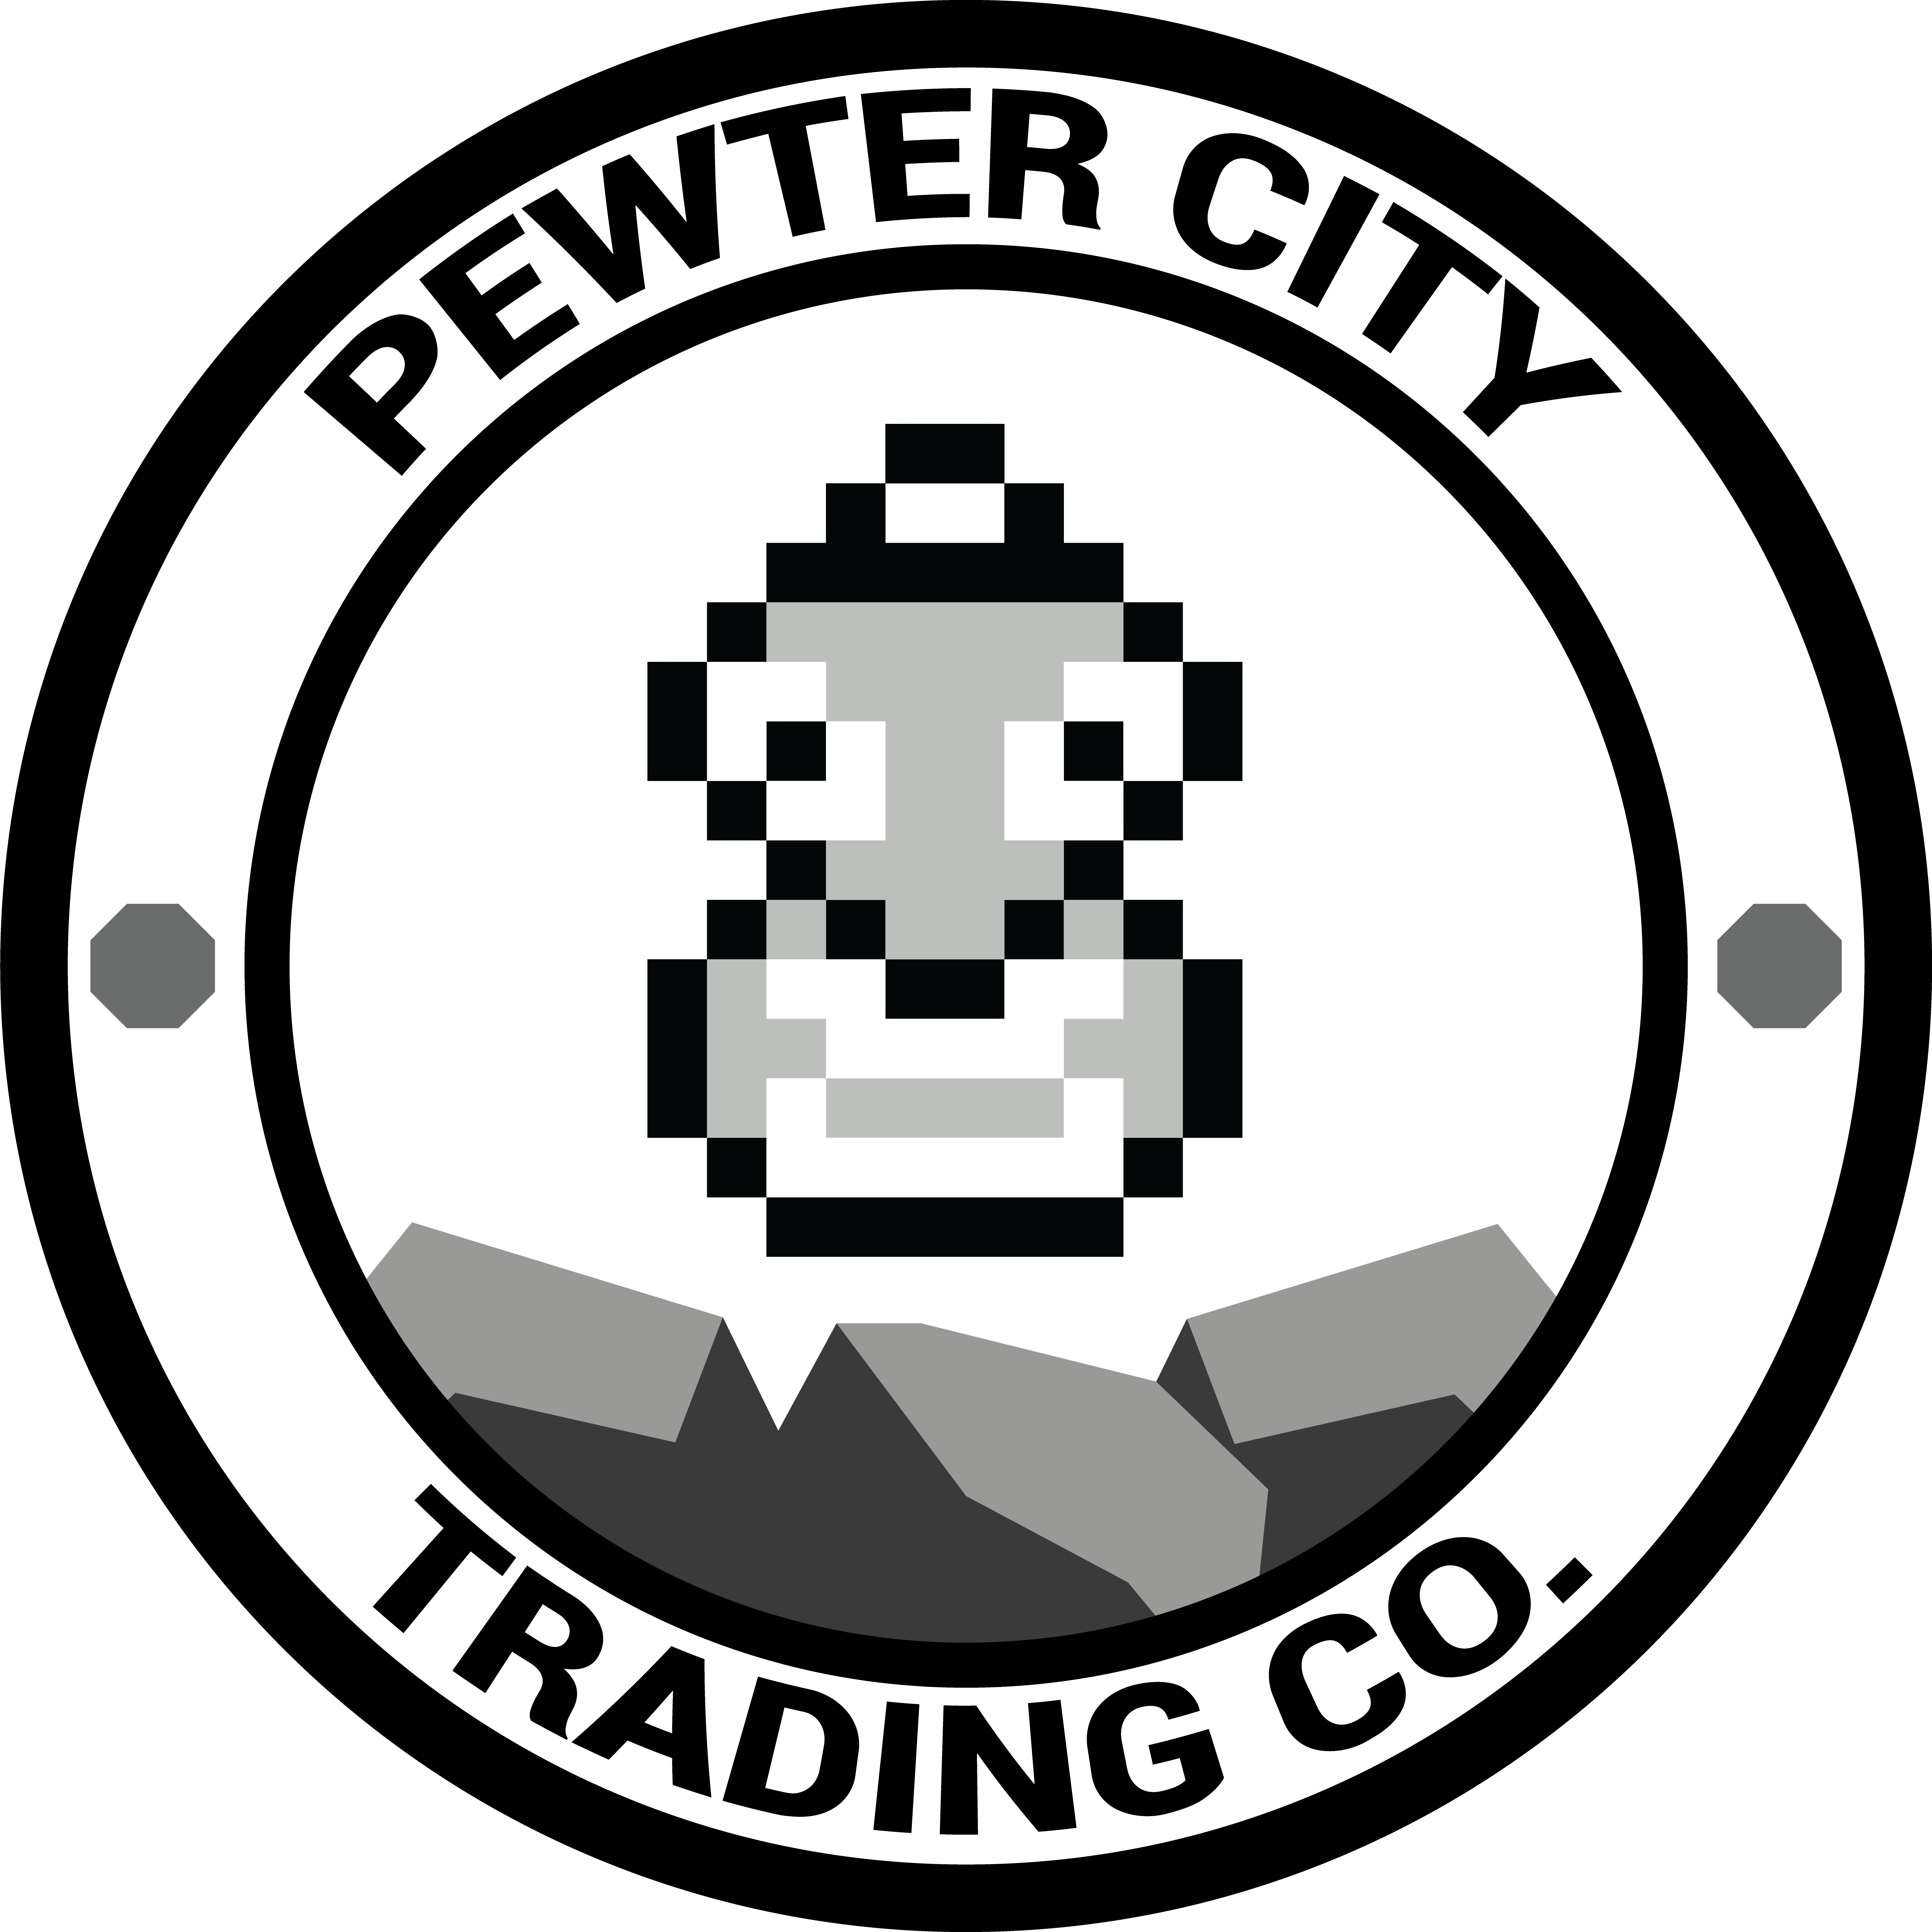 Pewter City Trading Company